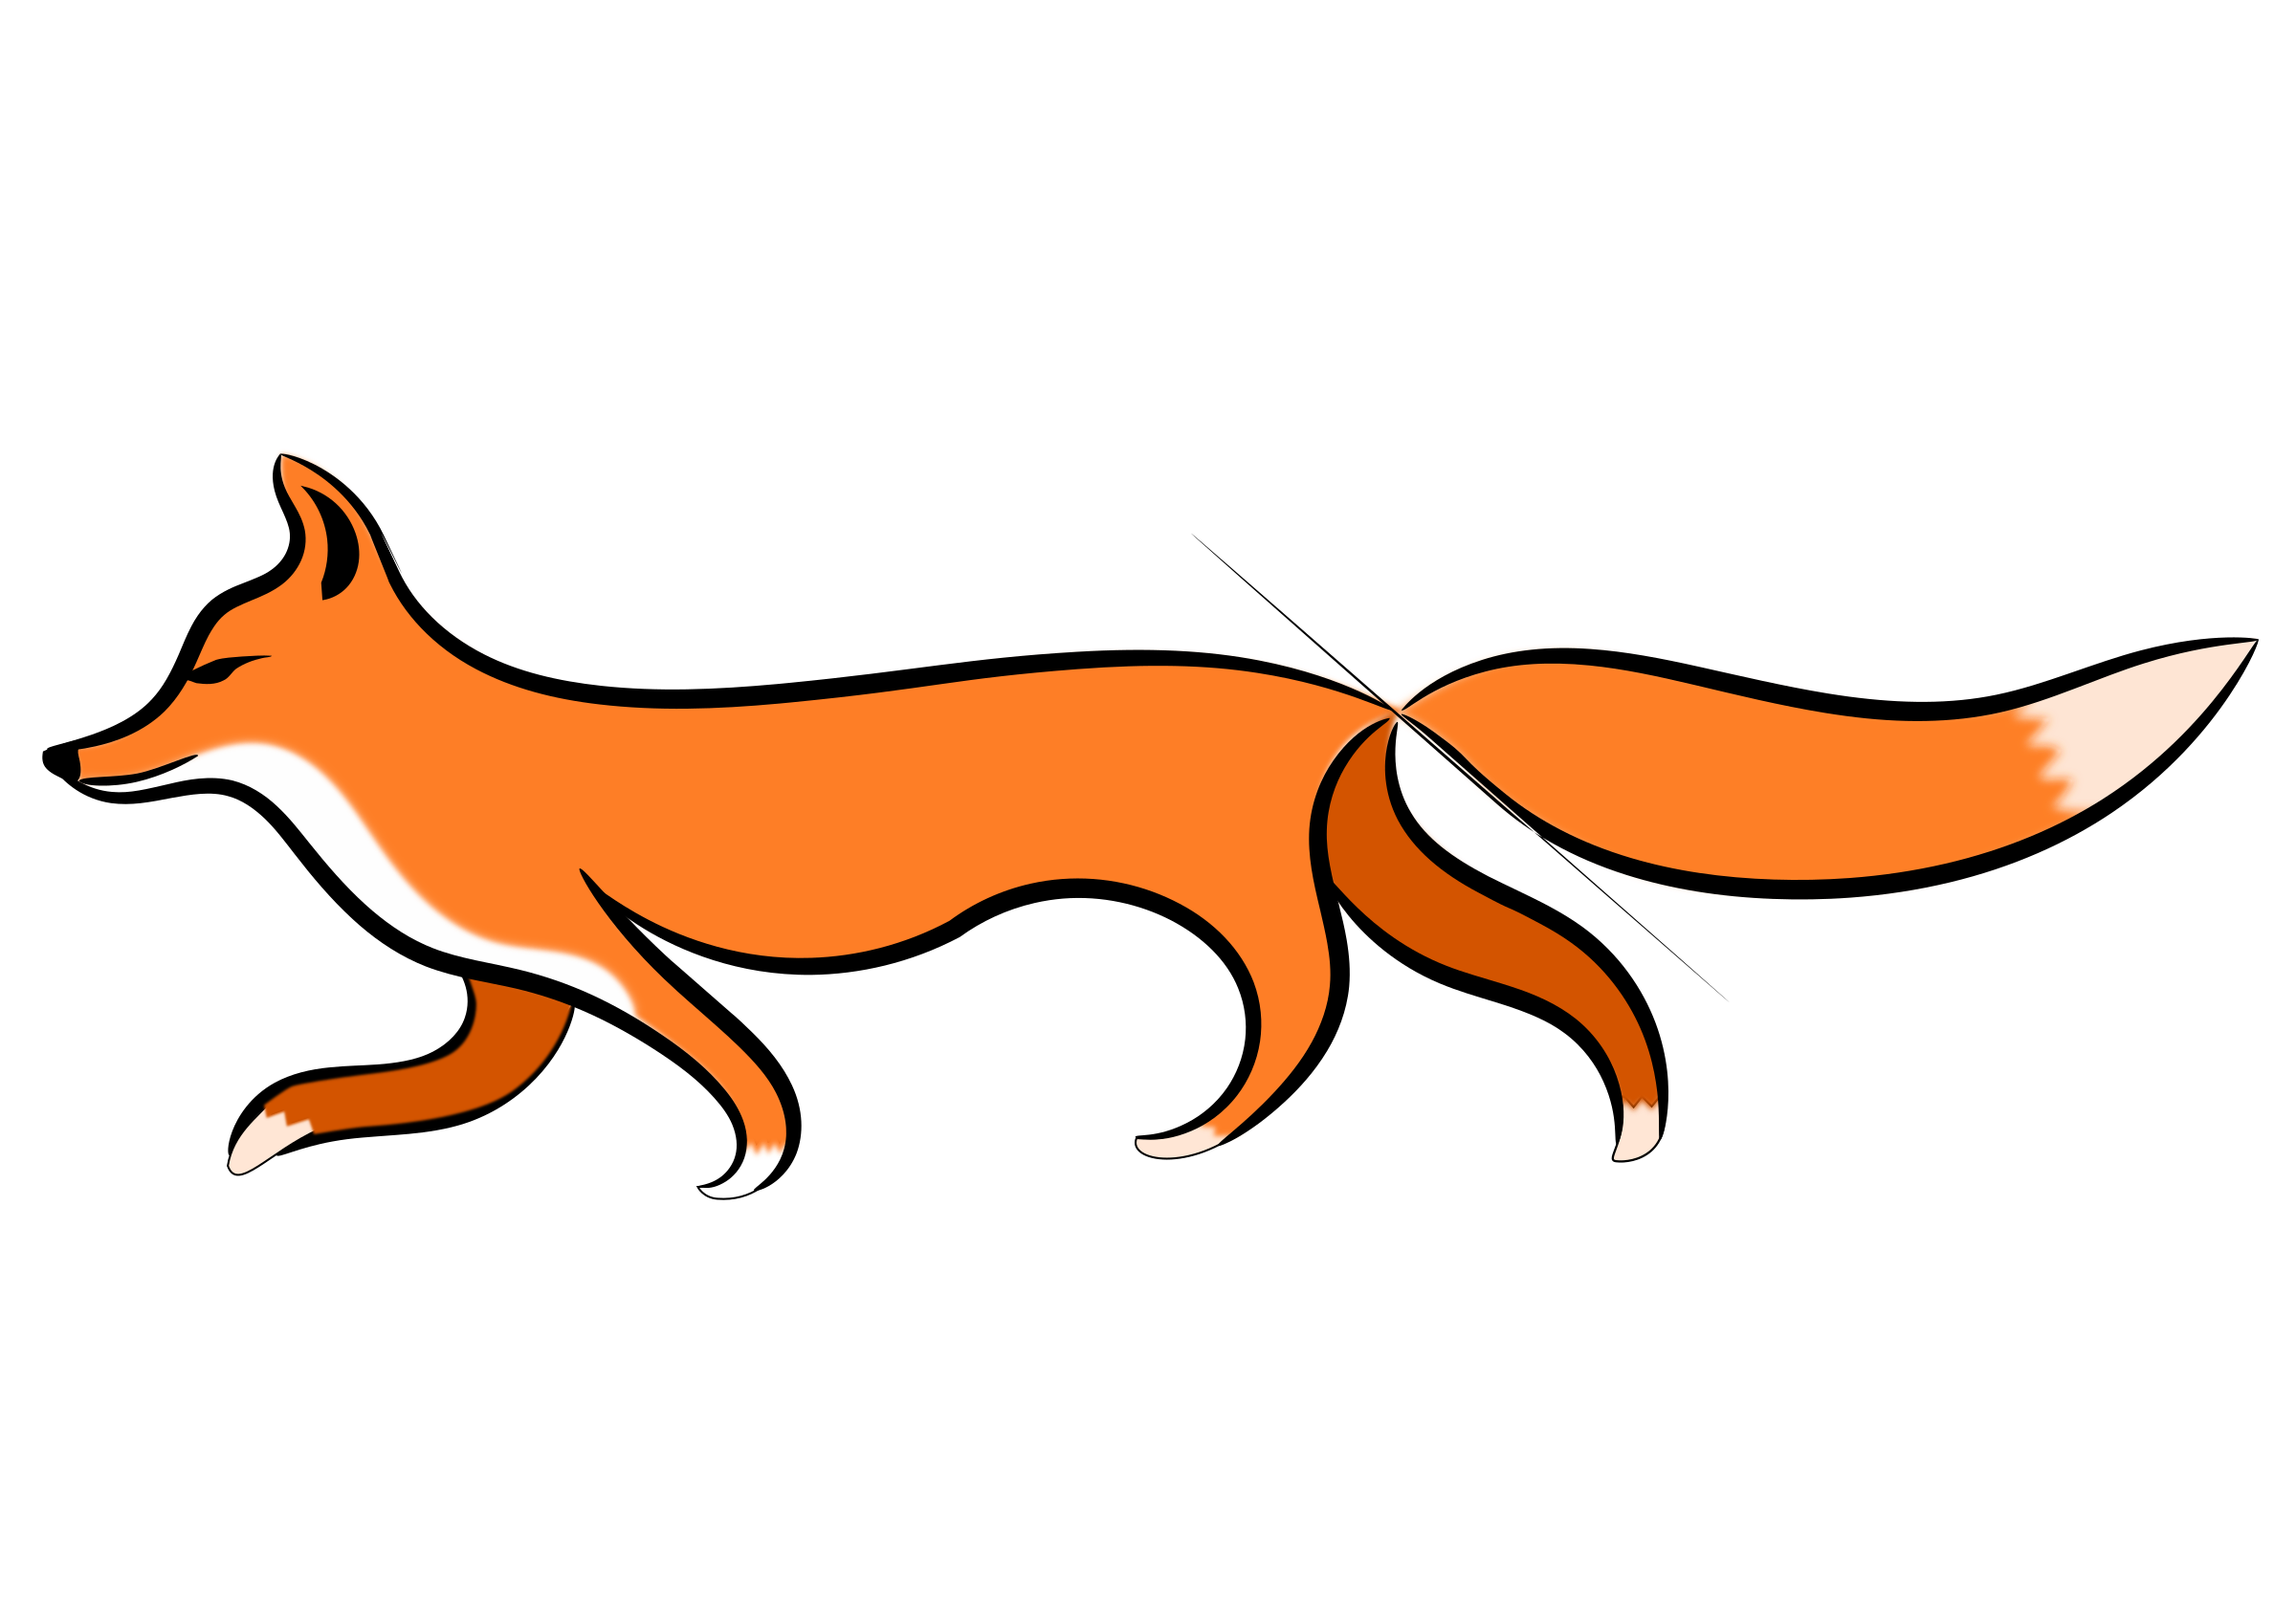 Remix big image png. Woodland clipart orange fox